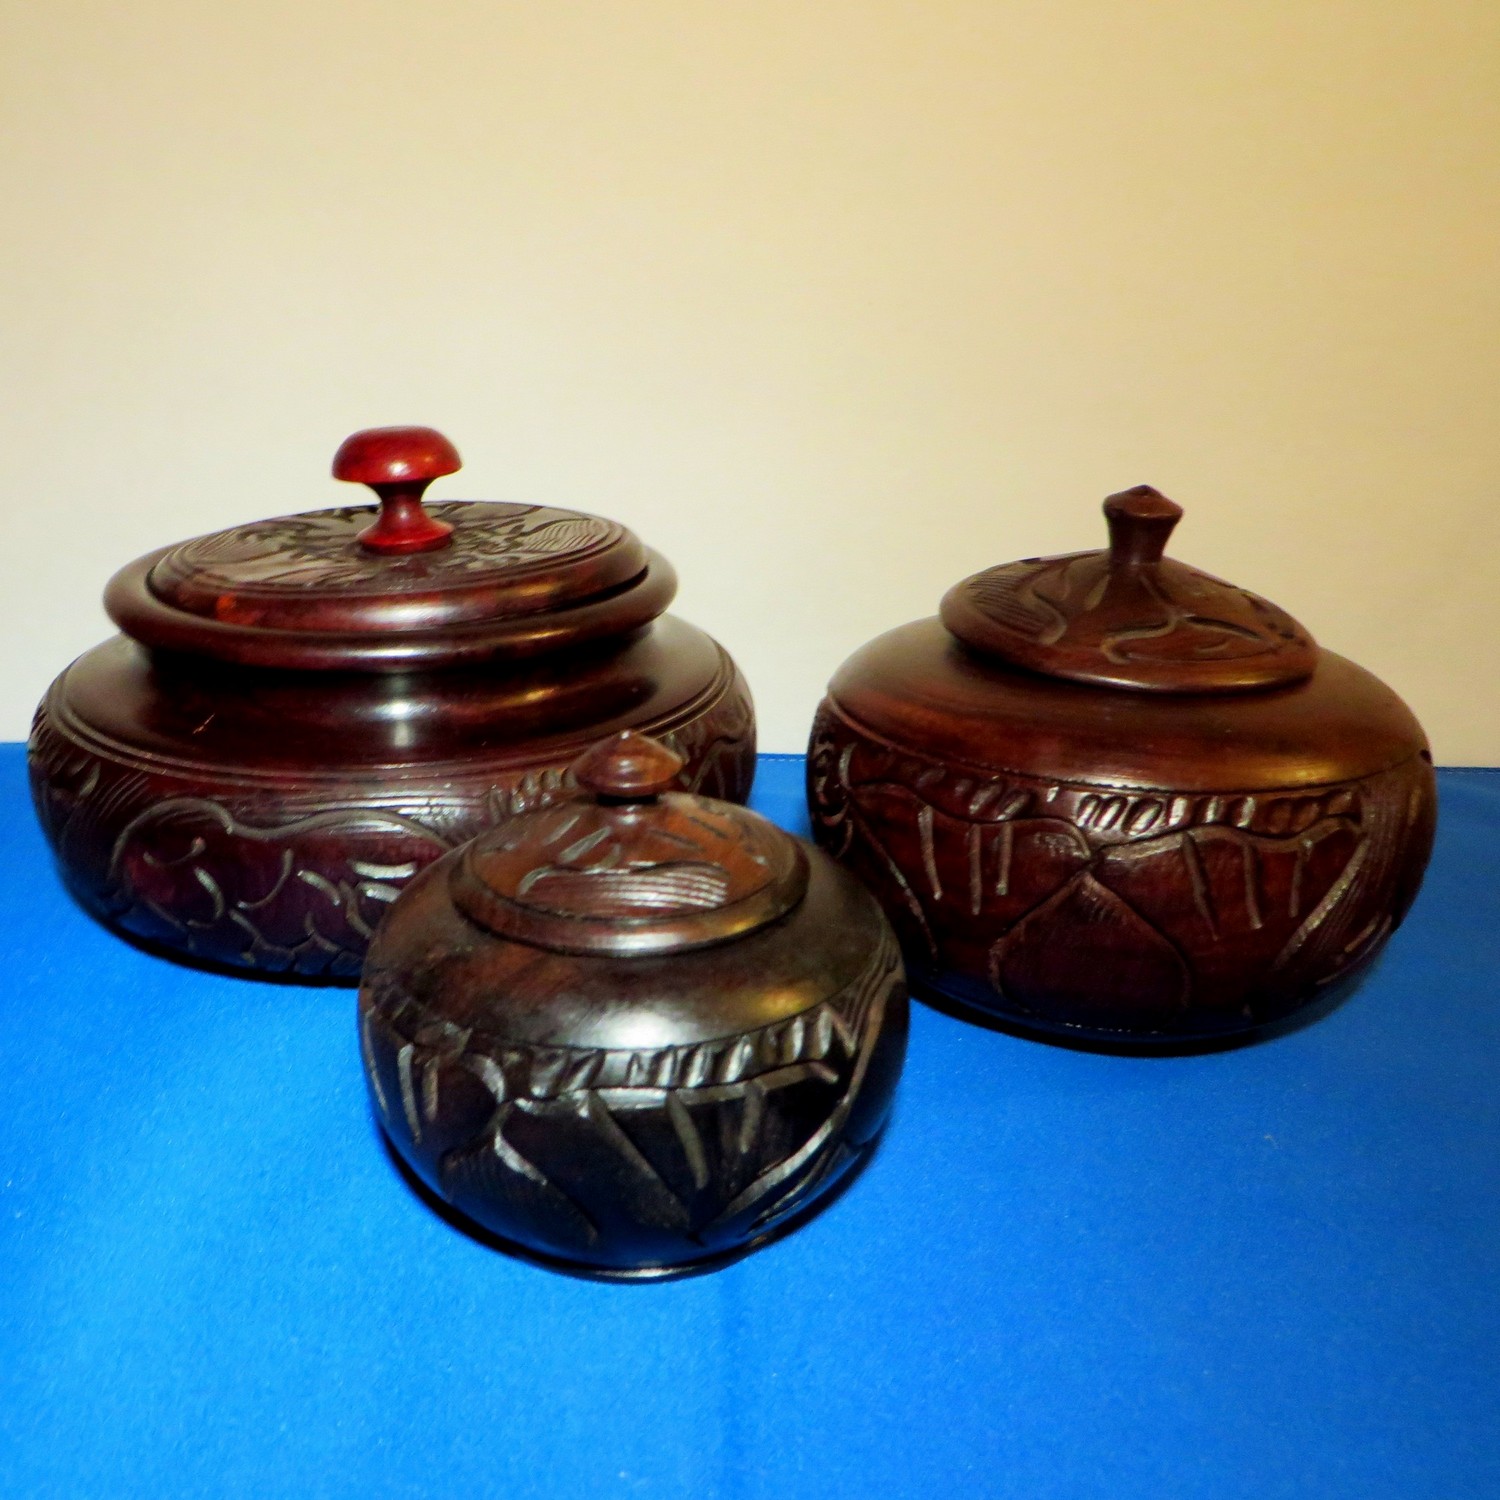 Details about   handmade wooden lidded bowl